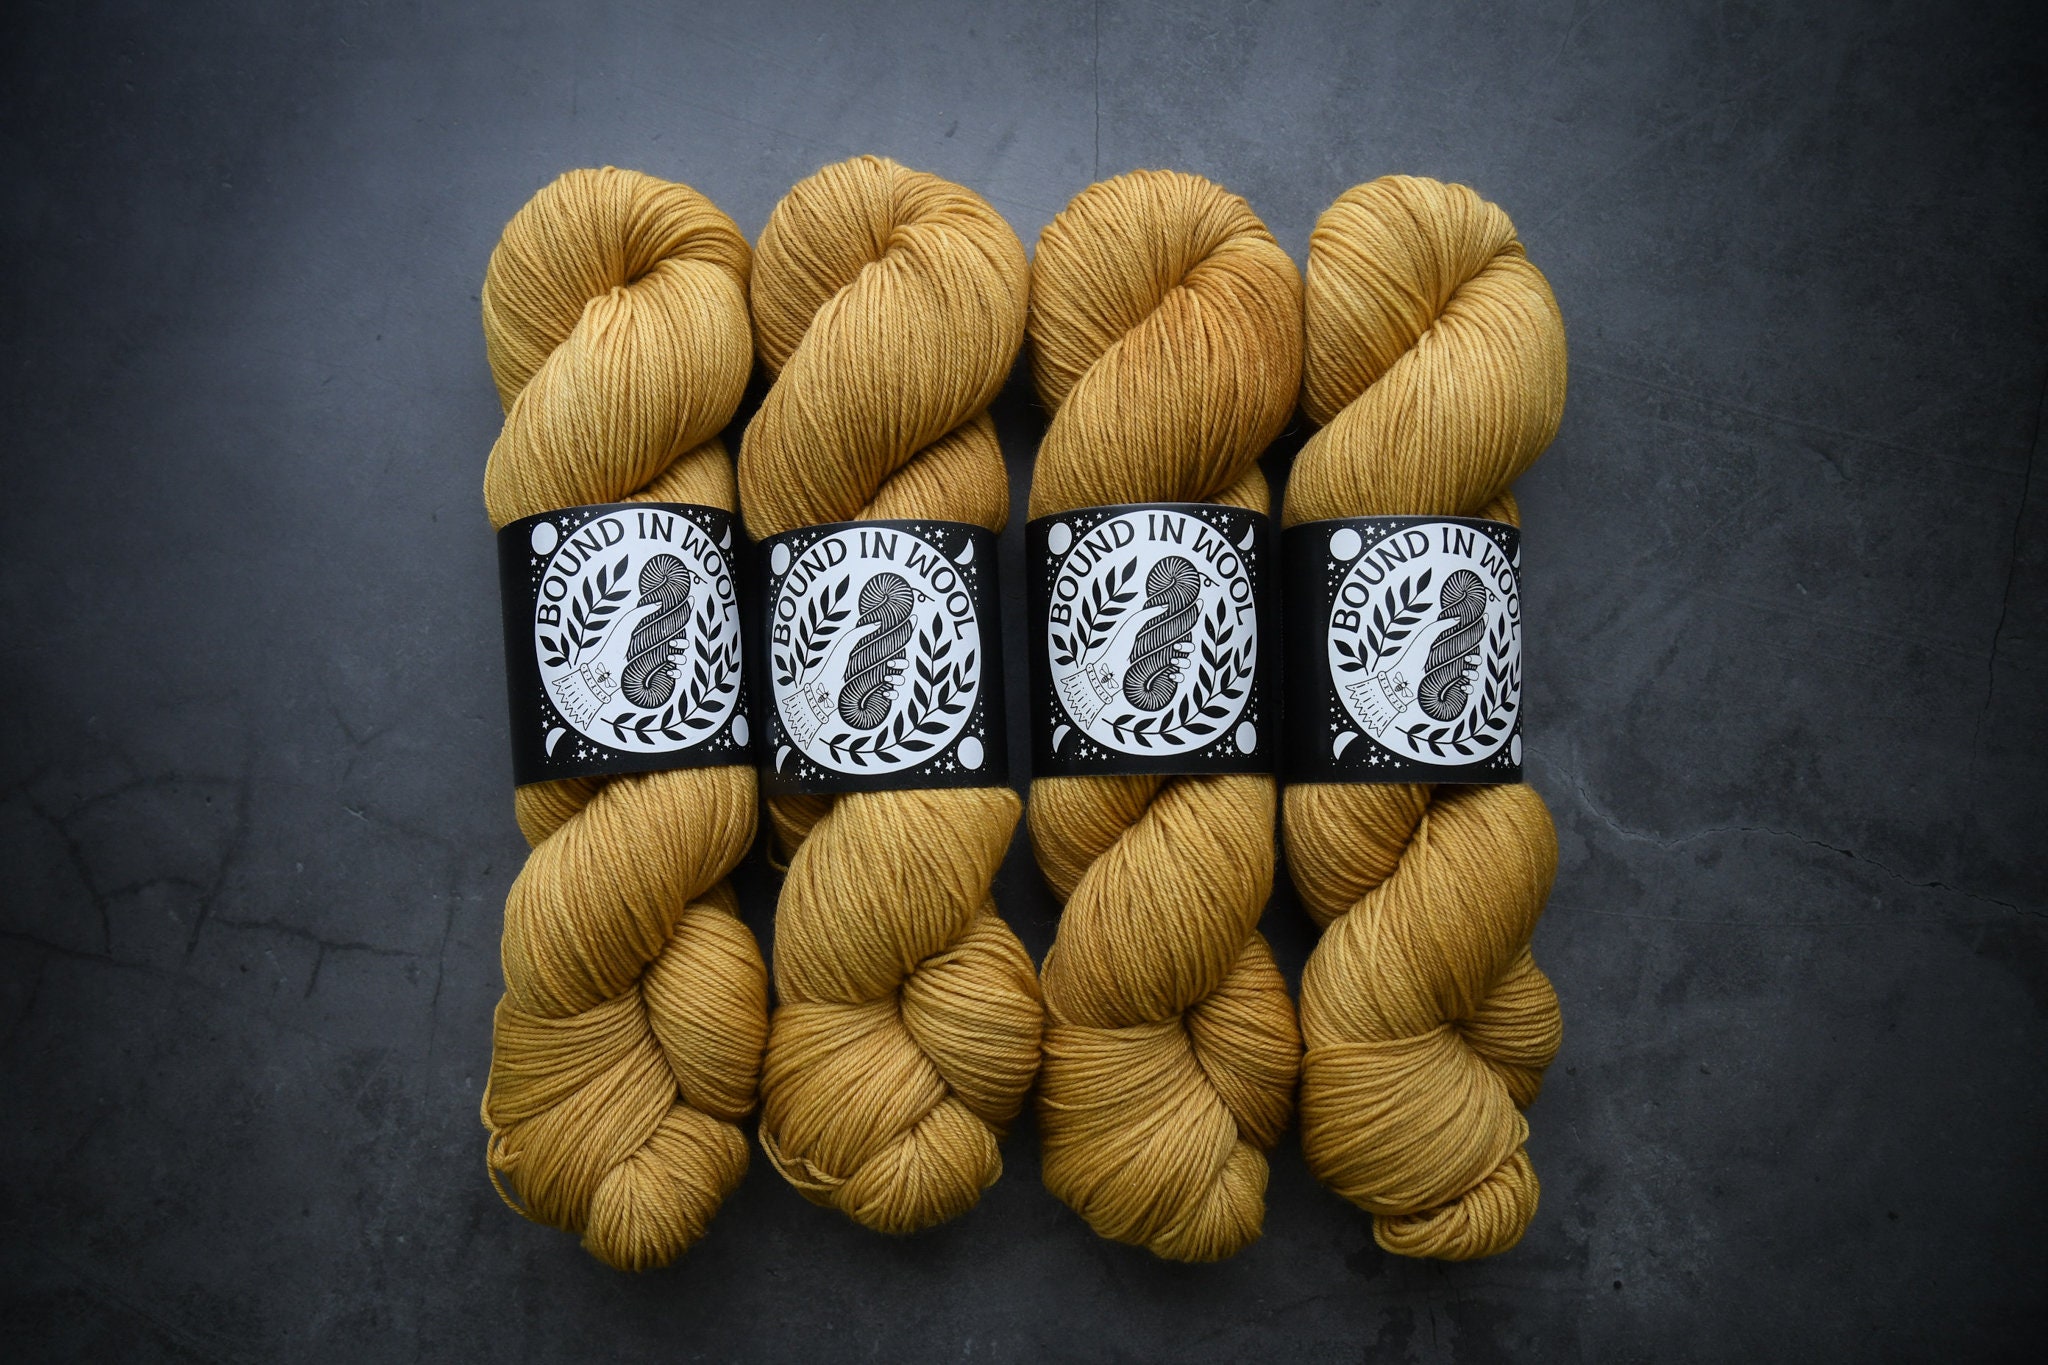 Loops & Threads Cozy Wool Merino Yarn. Knitting Supplies, Crochet Supplies.  Wool Blend Yarn Mustard, Berry Multi 